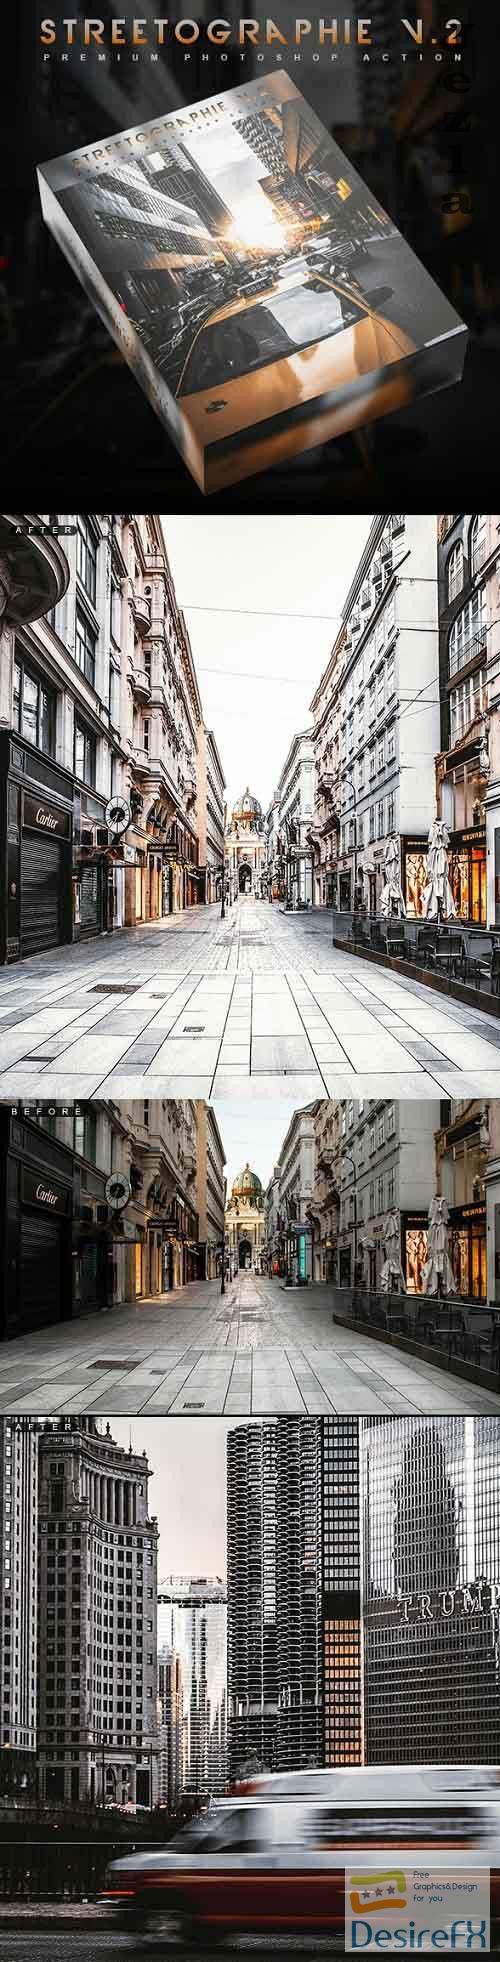 Streetographie V.2 - Premium Photoshop Action 26769090